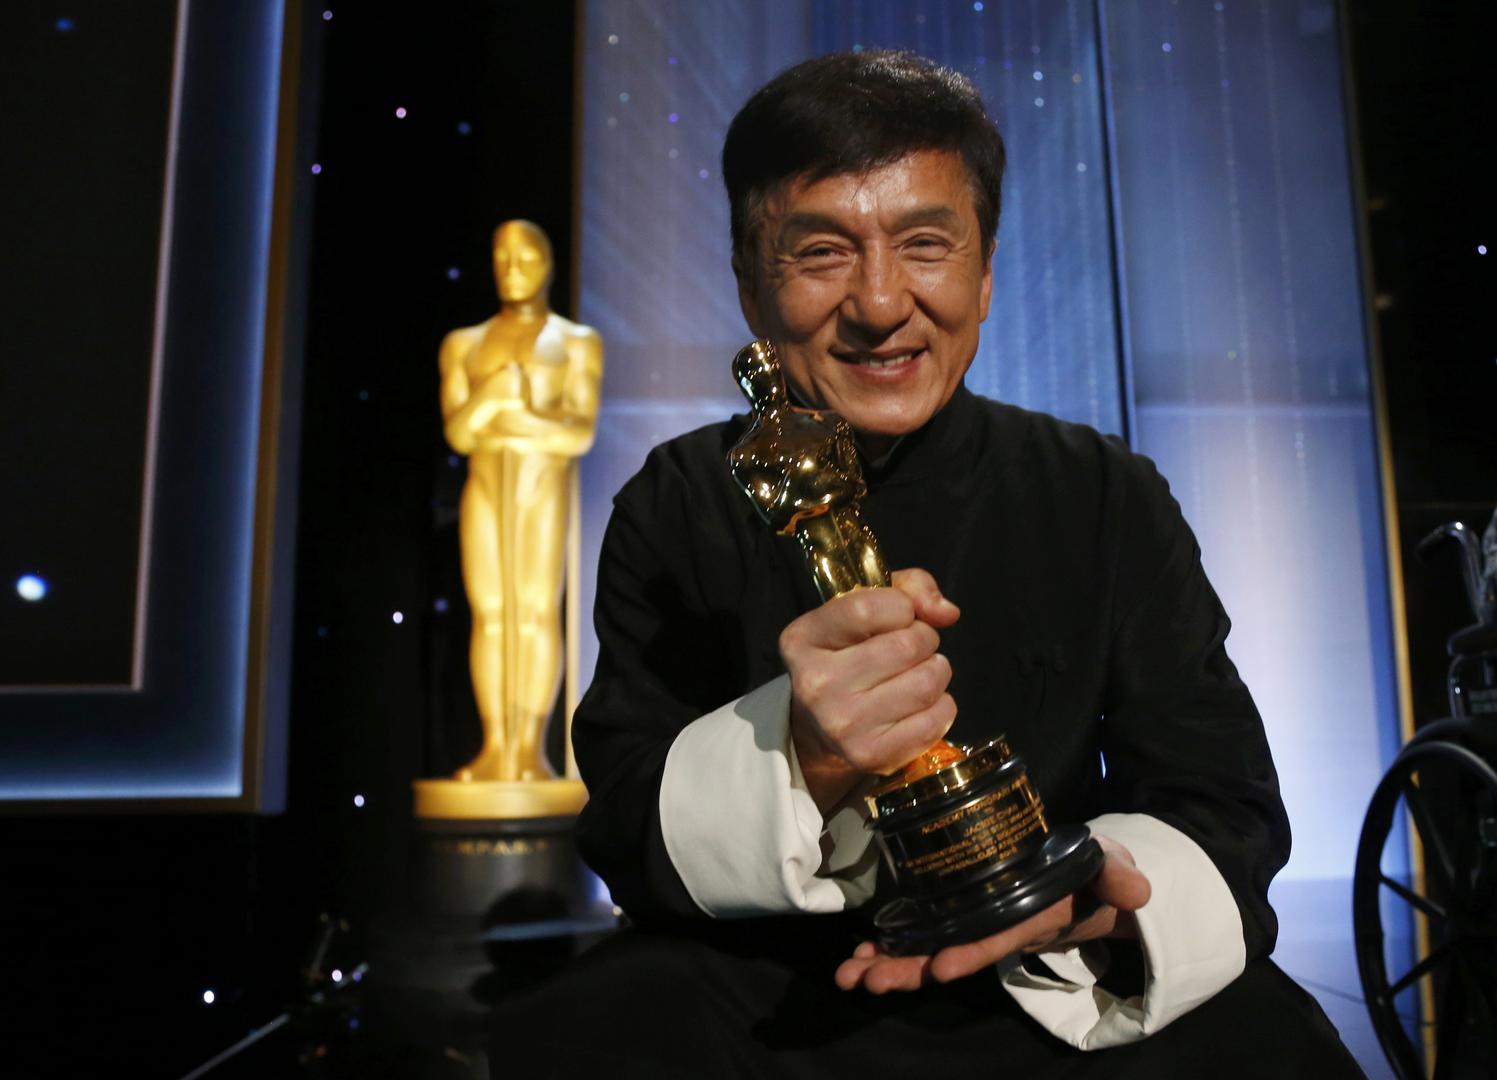 Na petom je mjestu Jackie Chan, a slijede ga Robert Downey Jr, Tom Cruise te tri zvijezde Bollywooda, Shah Rukh Khan, Salman Khan i Akshay Kumar.